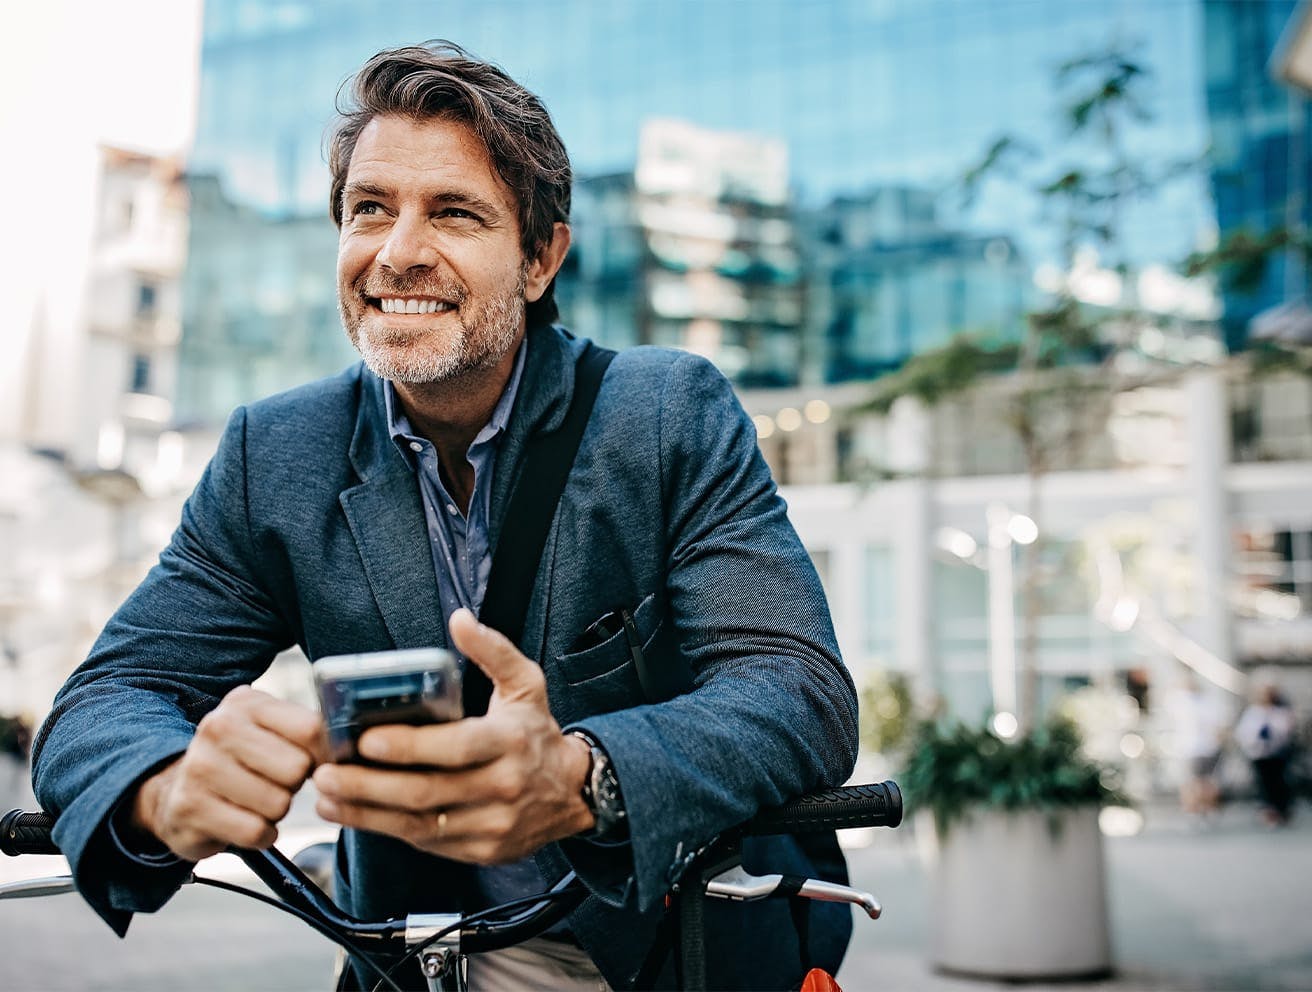 man on a bike holding phone